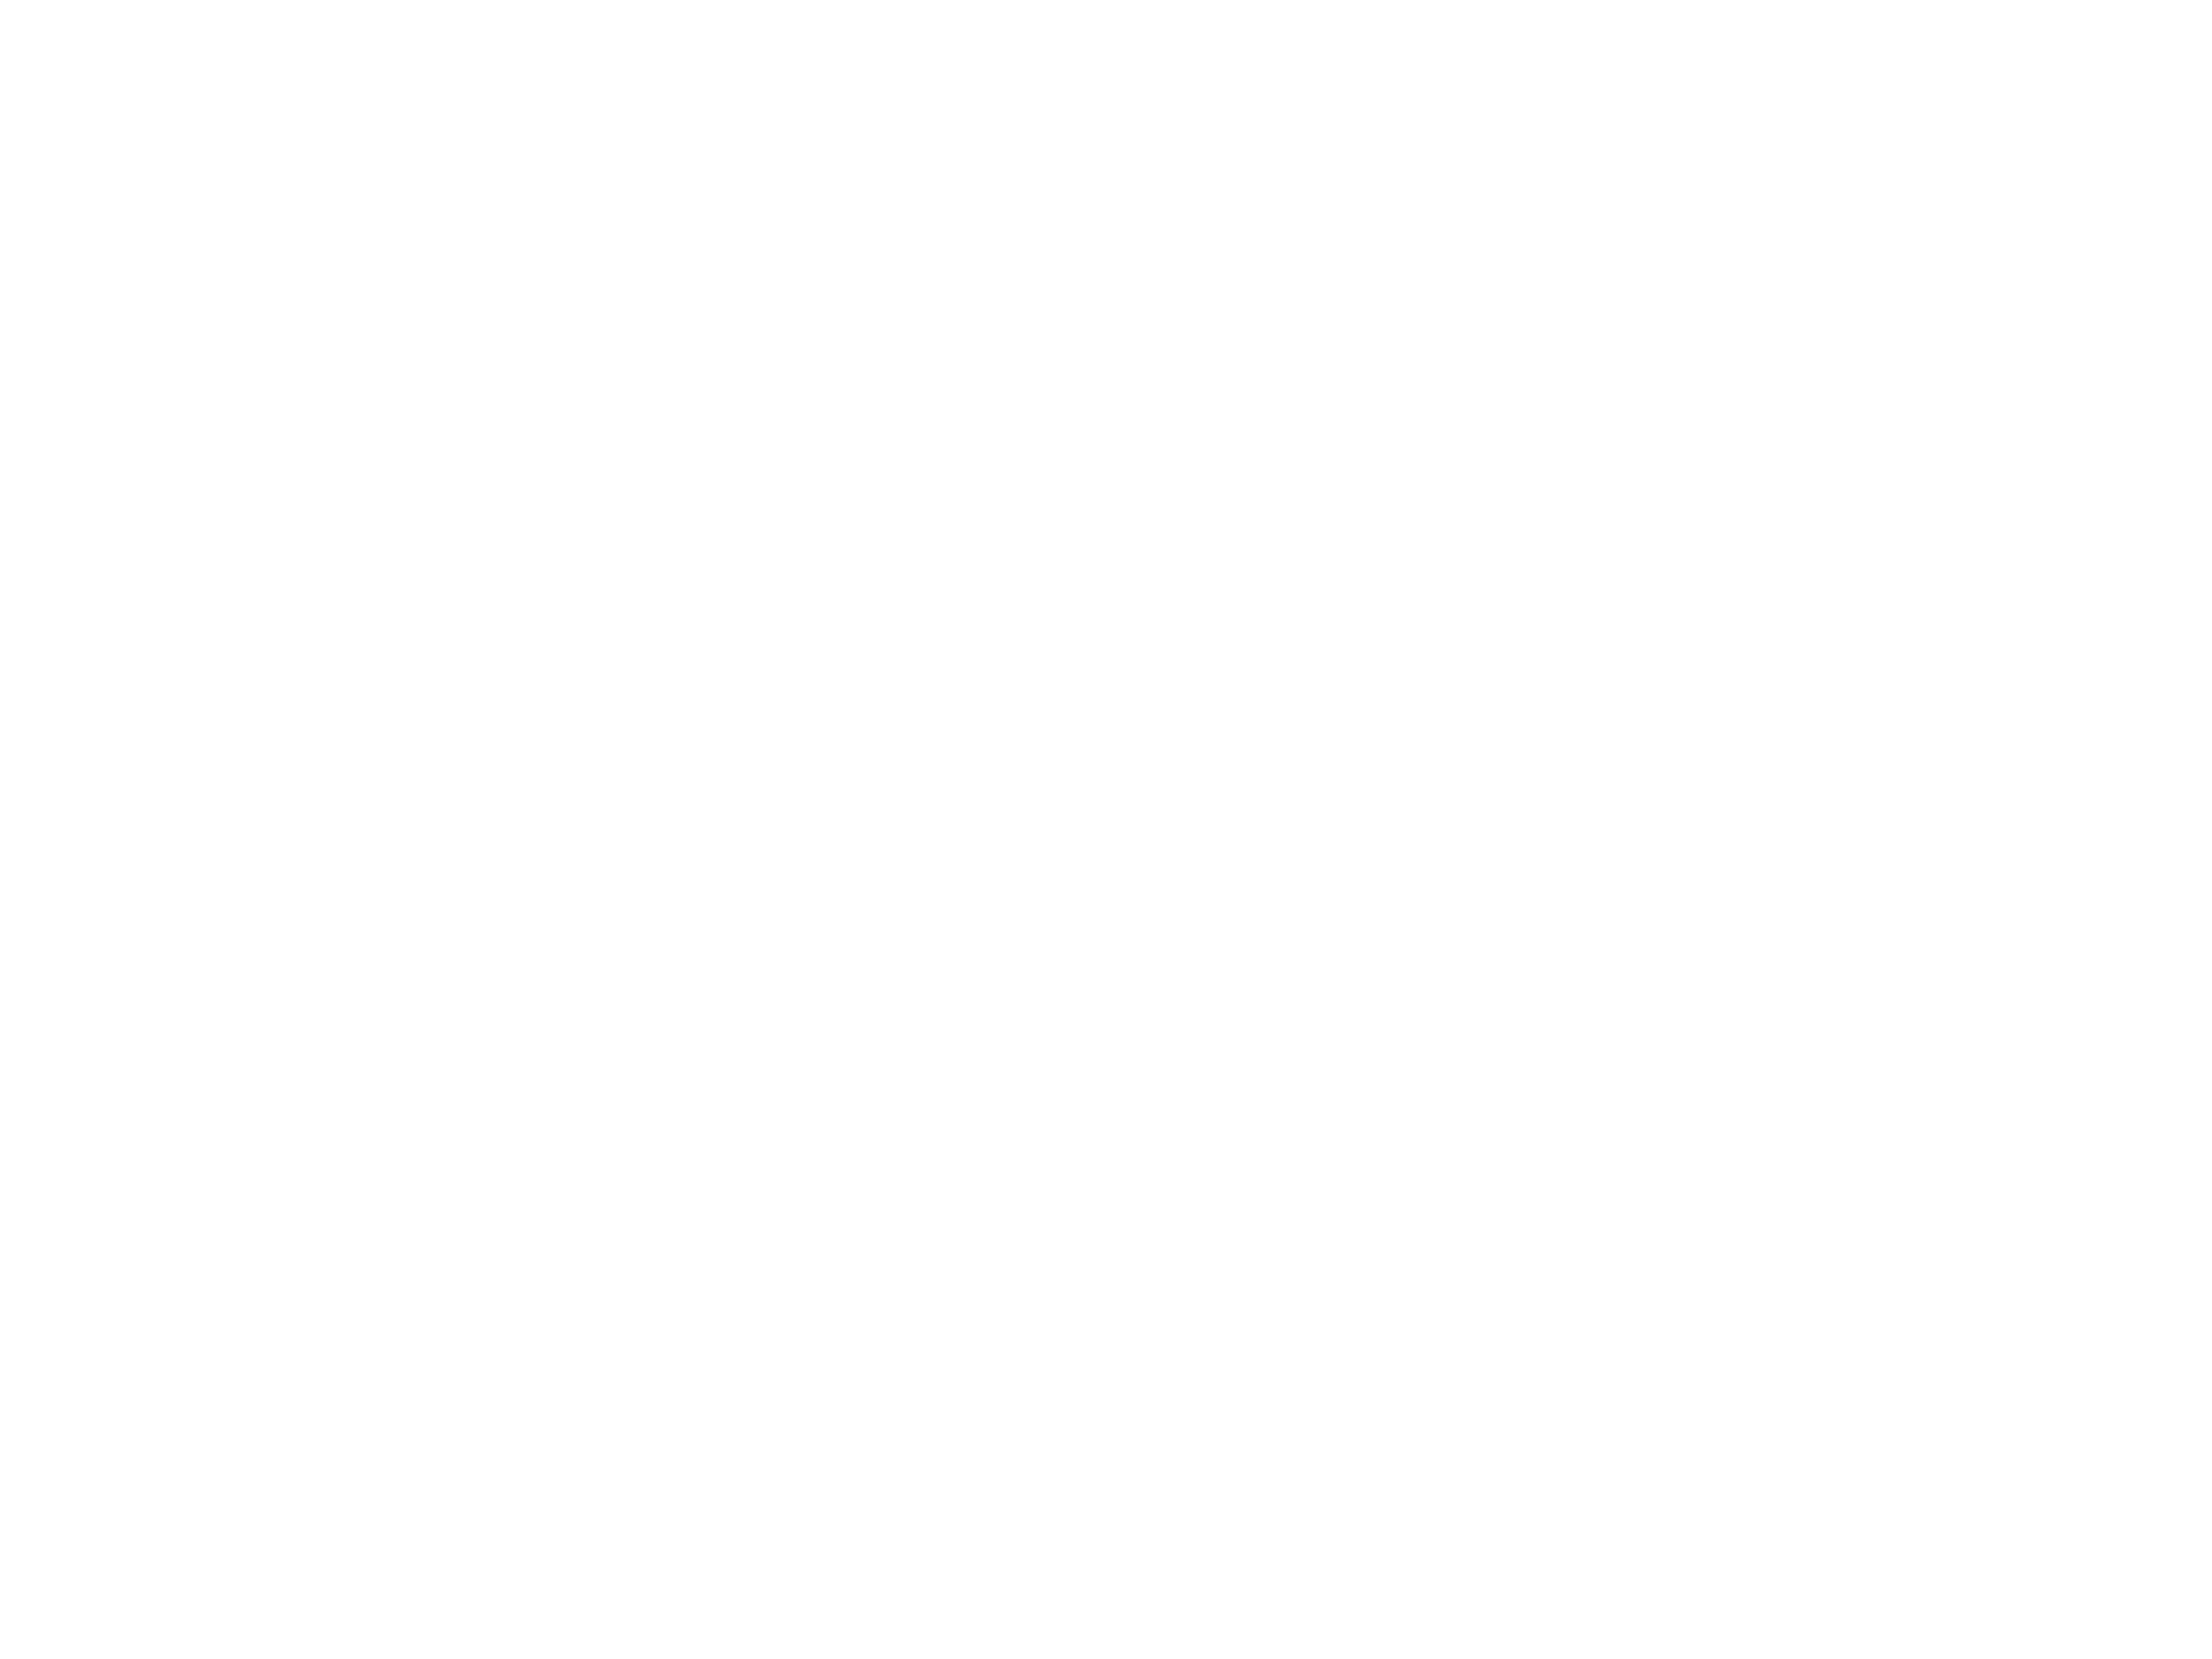 Daniel Carreón Fotógrafo